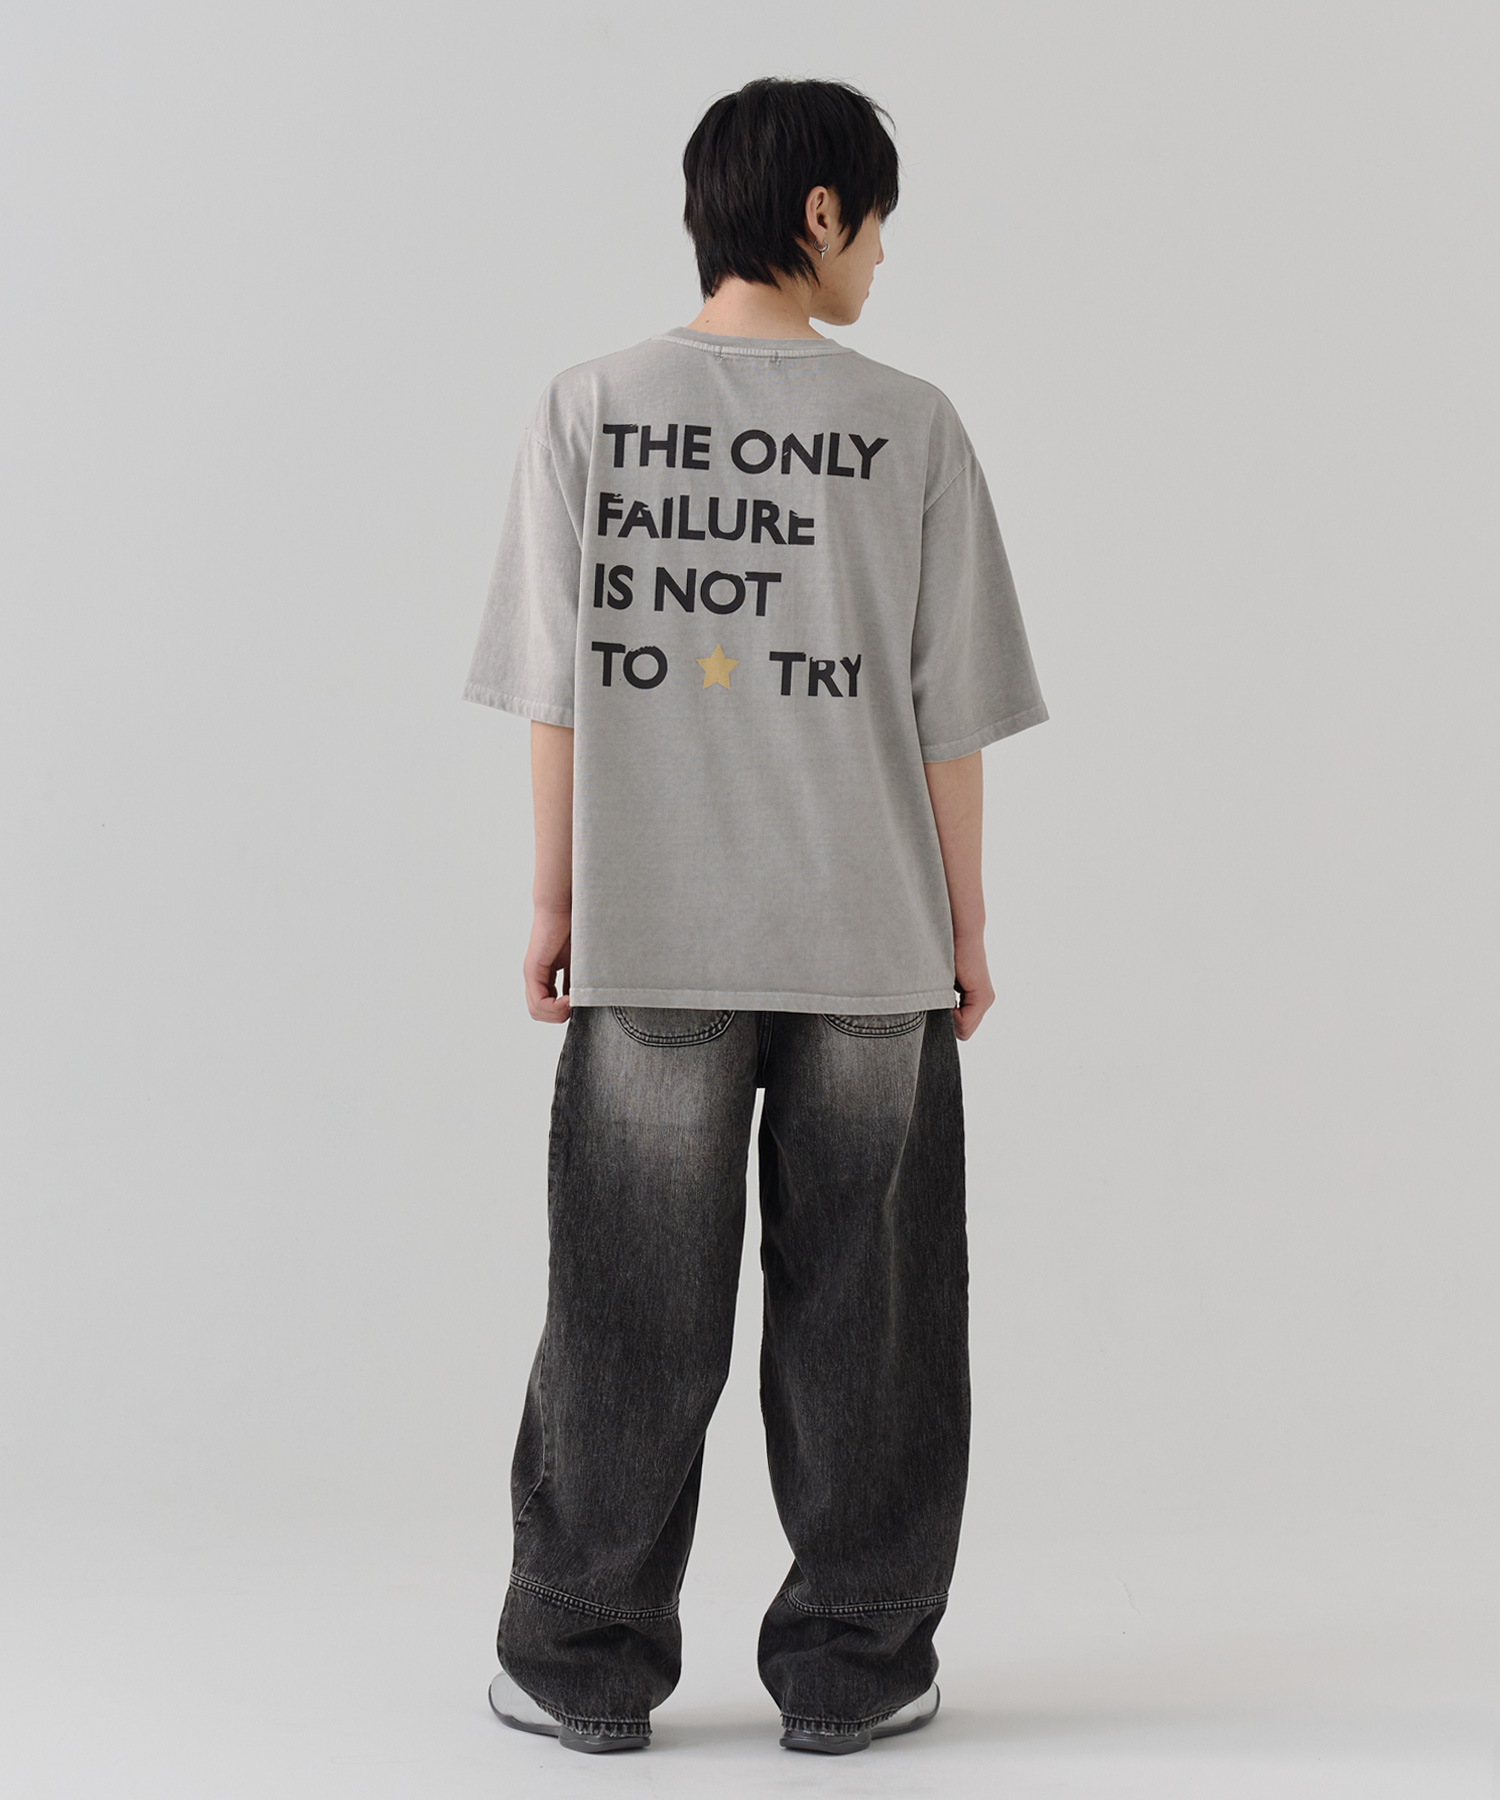 [24S/S] cross t shirts (grey), [noun](노운),[24S/S] cross t shirts (grey)